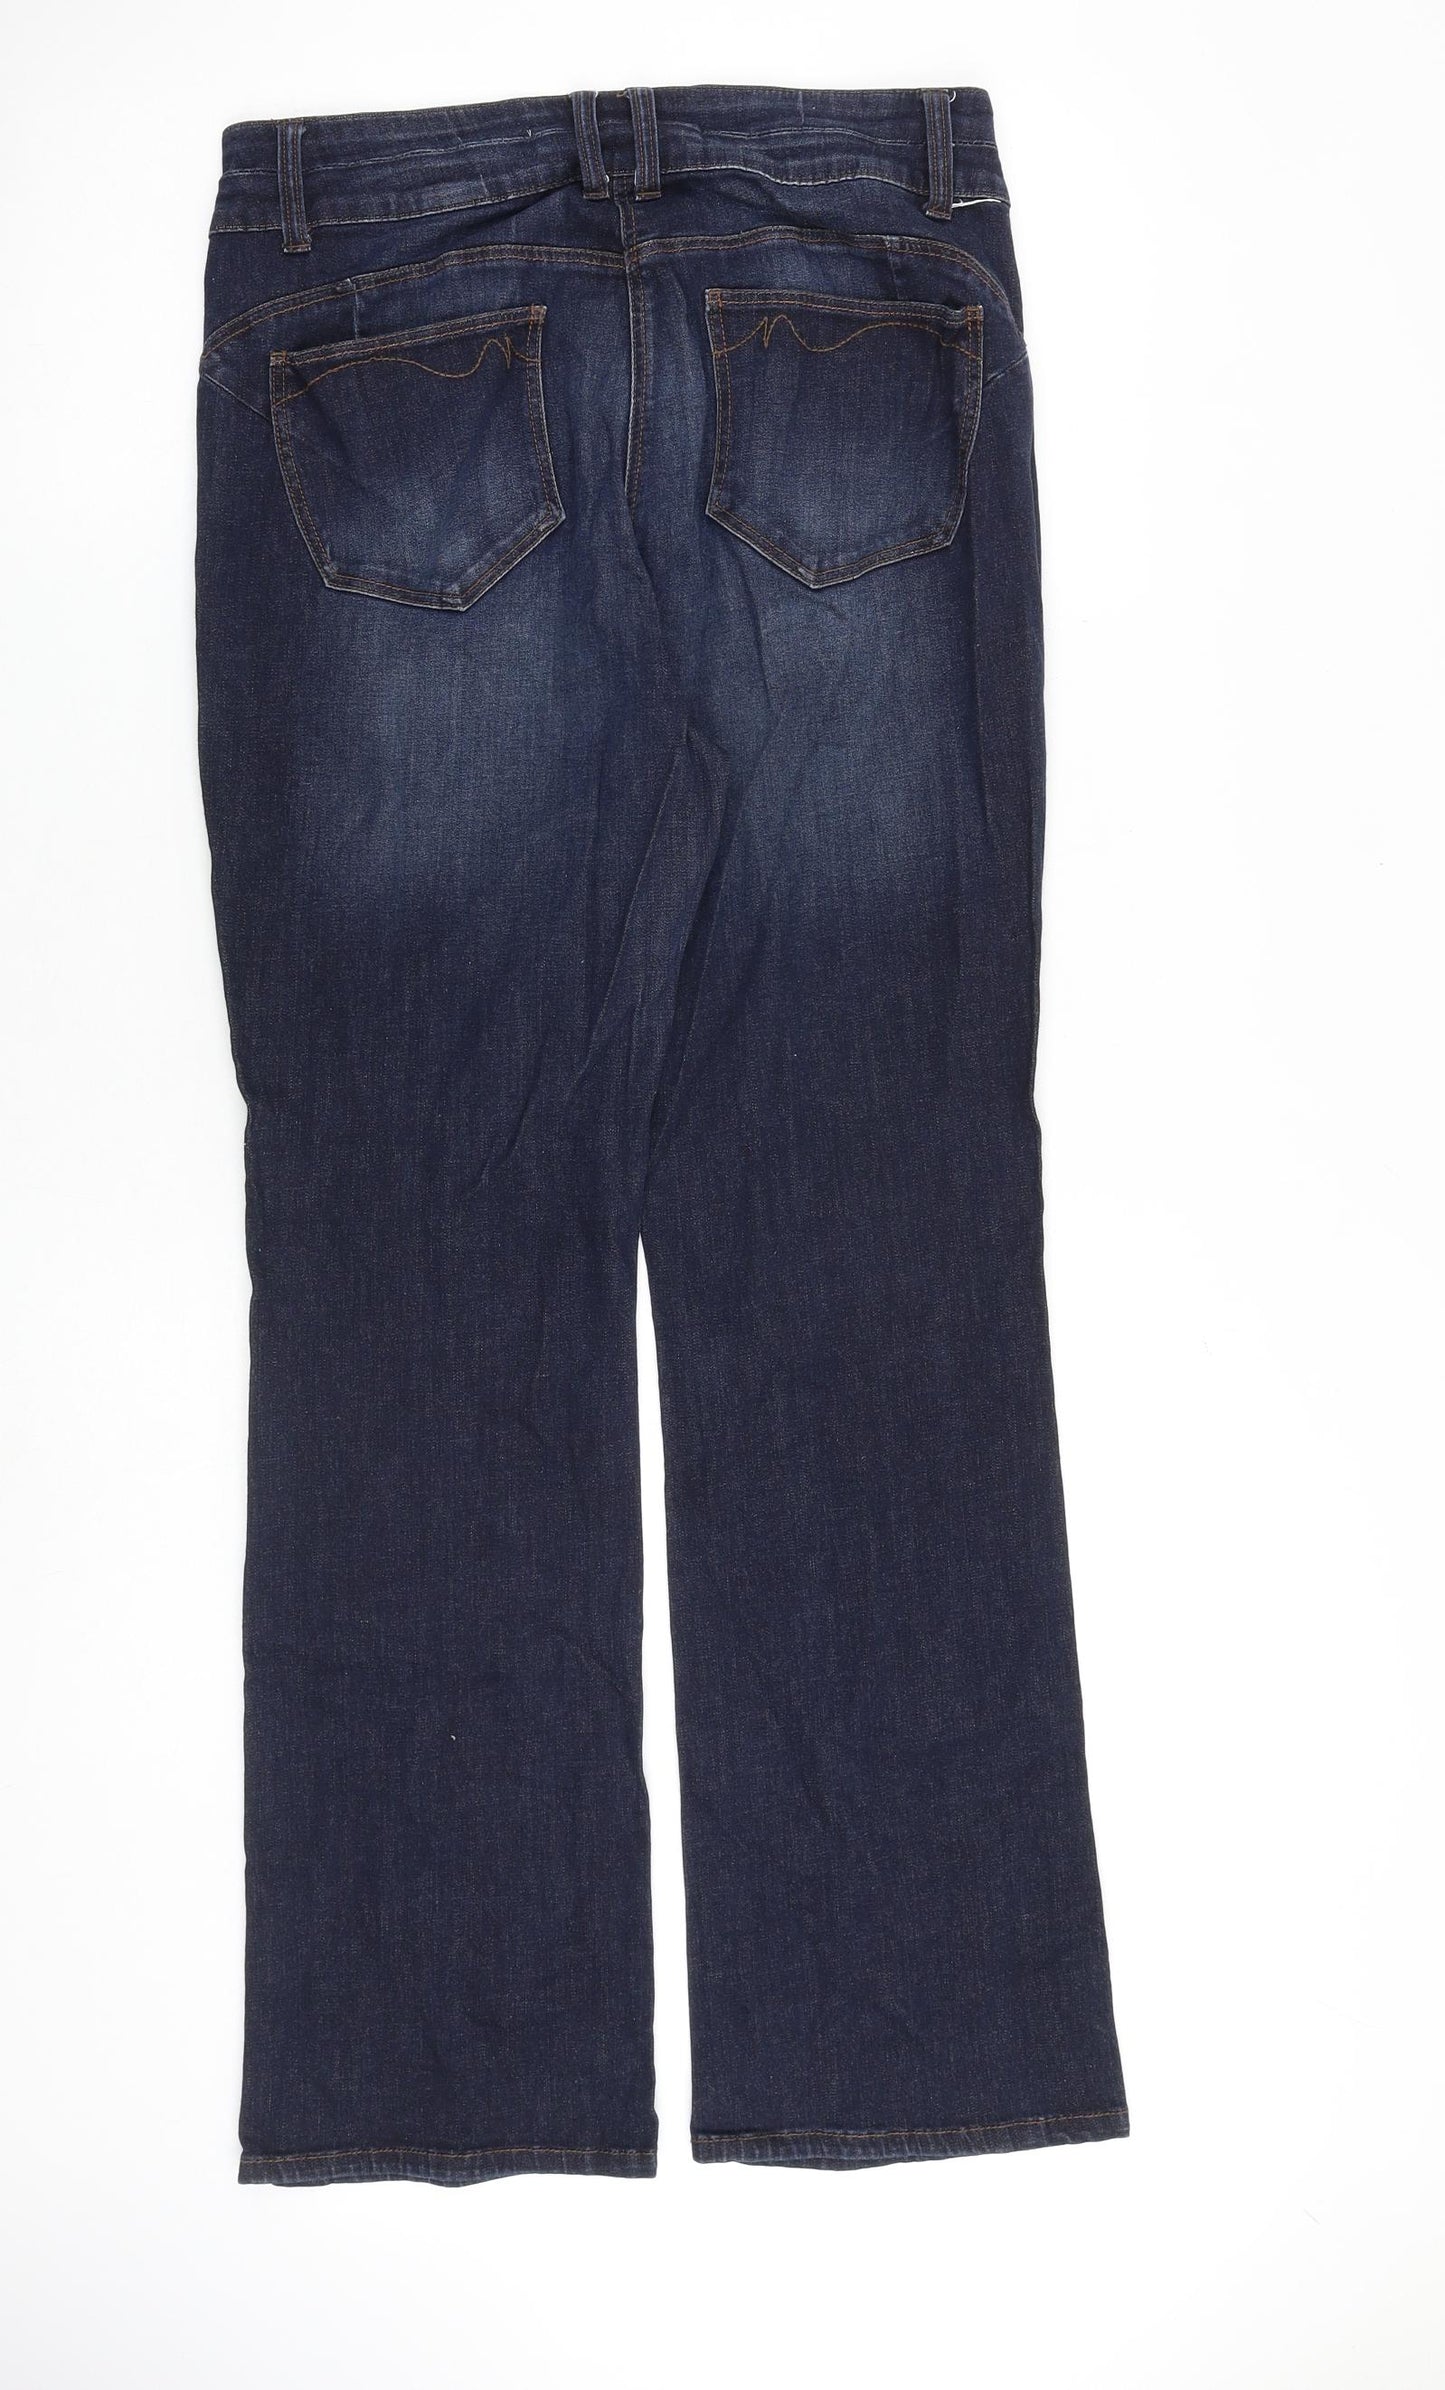 NEXT Womens Blue Cotton Bootcut Jeans Size 14 L31 in Regular Zip